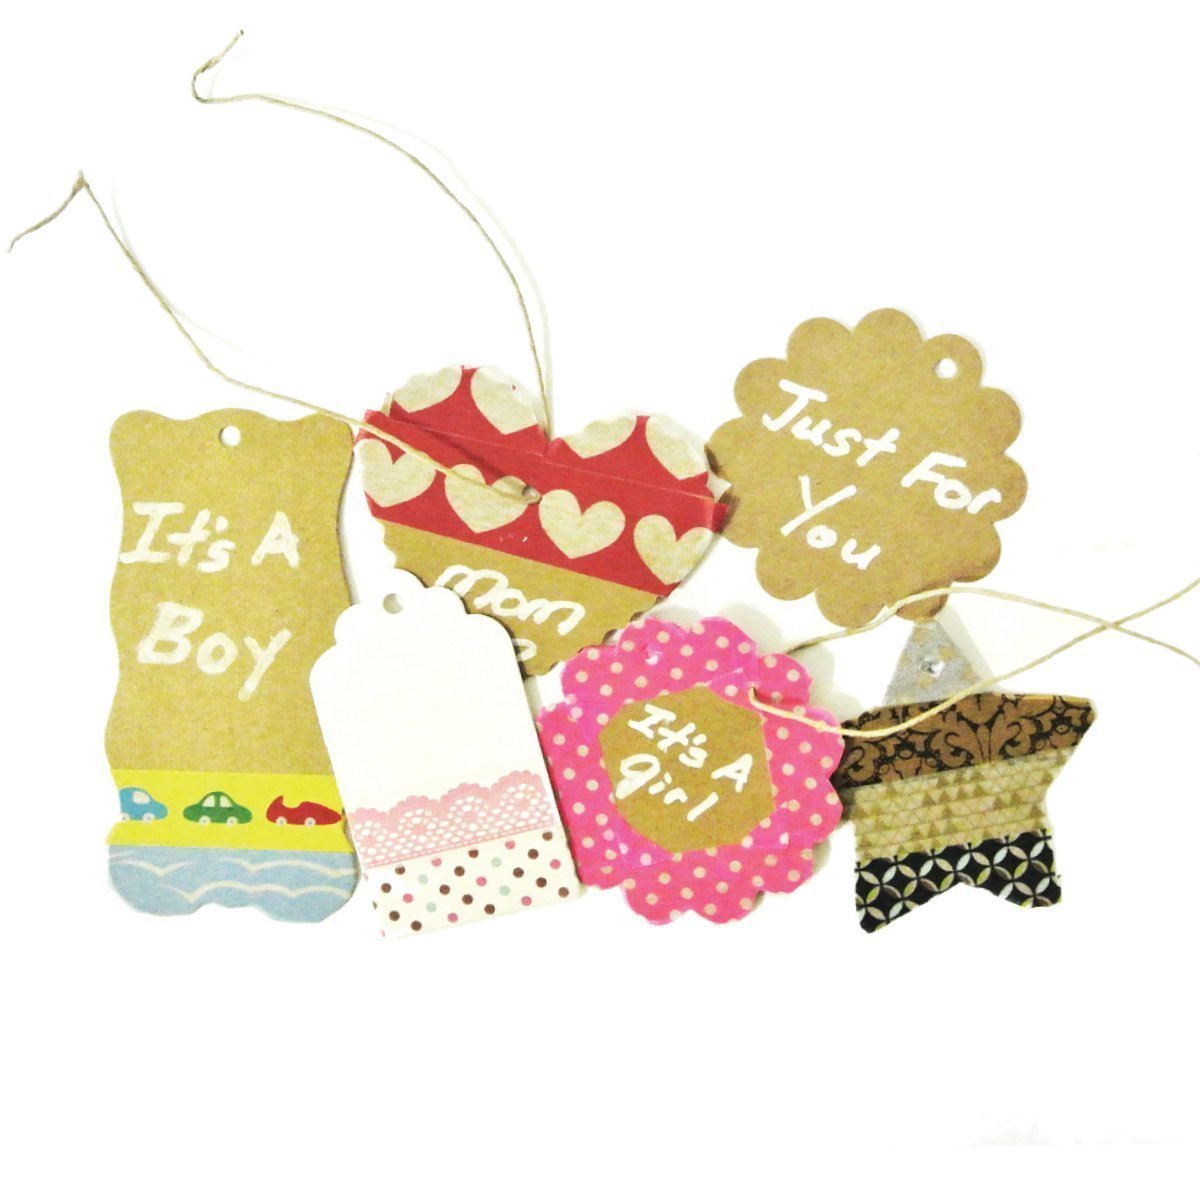 Wrapables Washi Tapes Decorative Masking Tapes, Set of 12